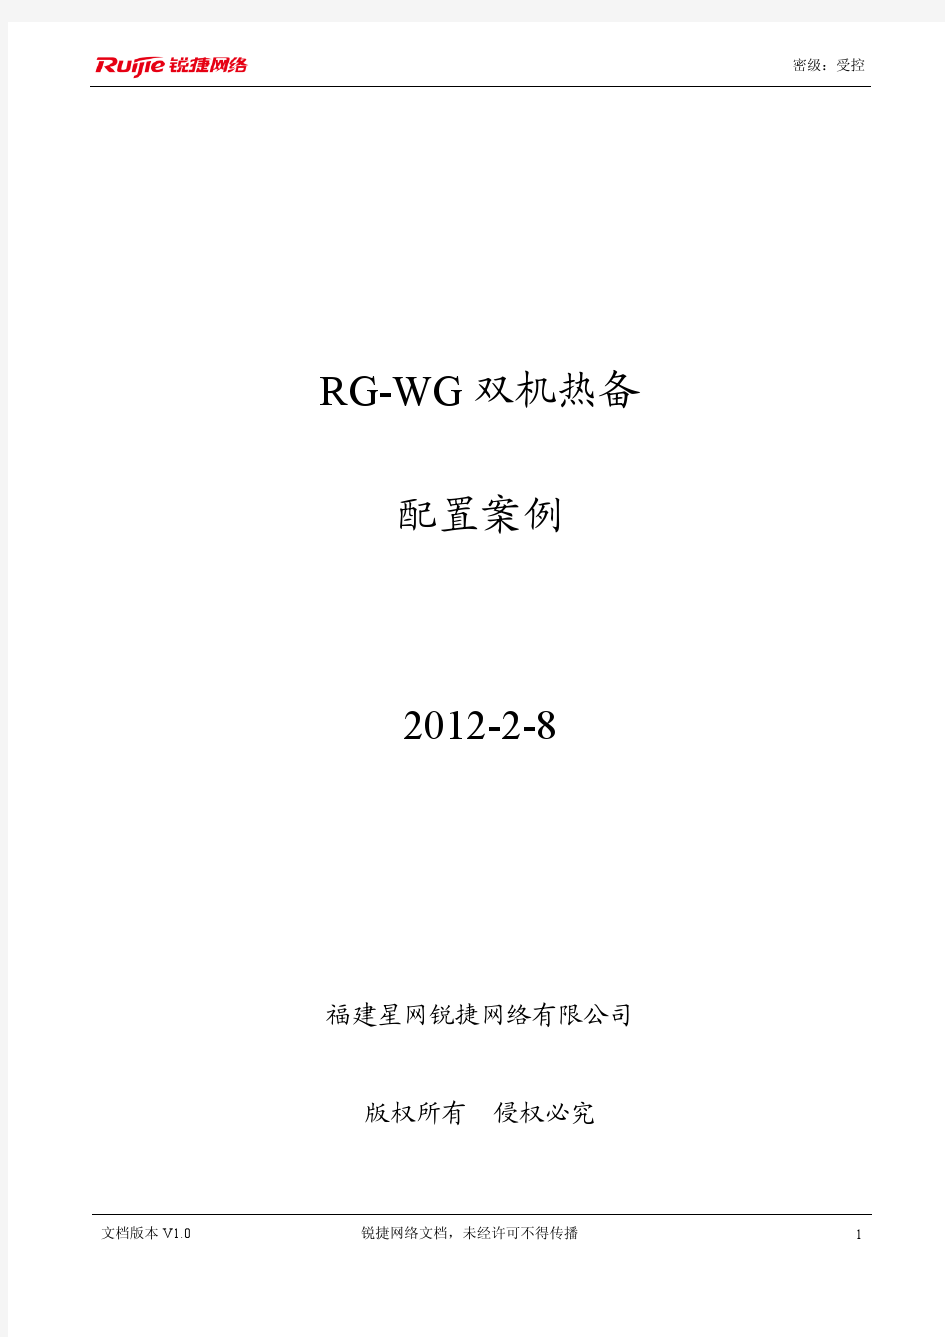 RG-WG双机热备配置案例